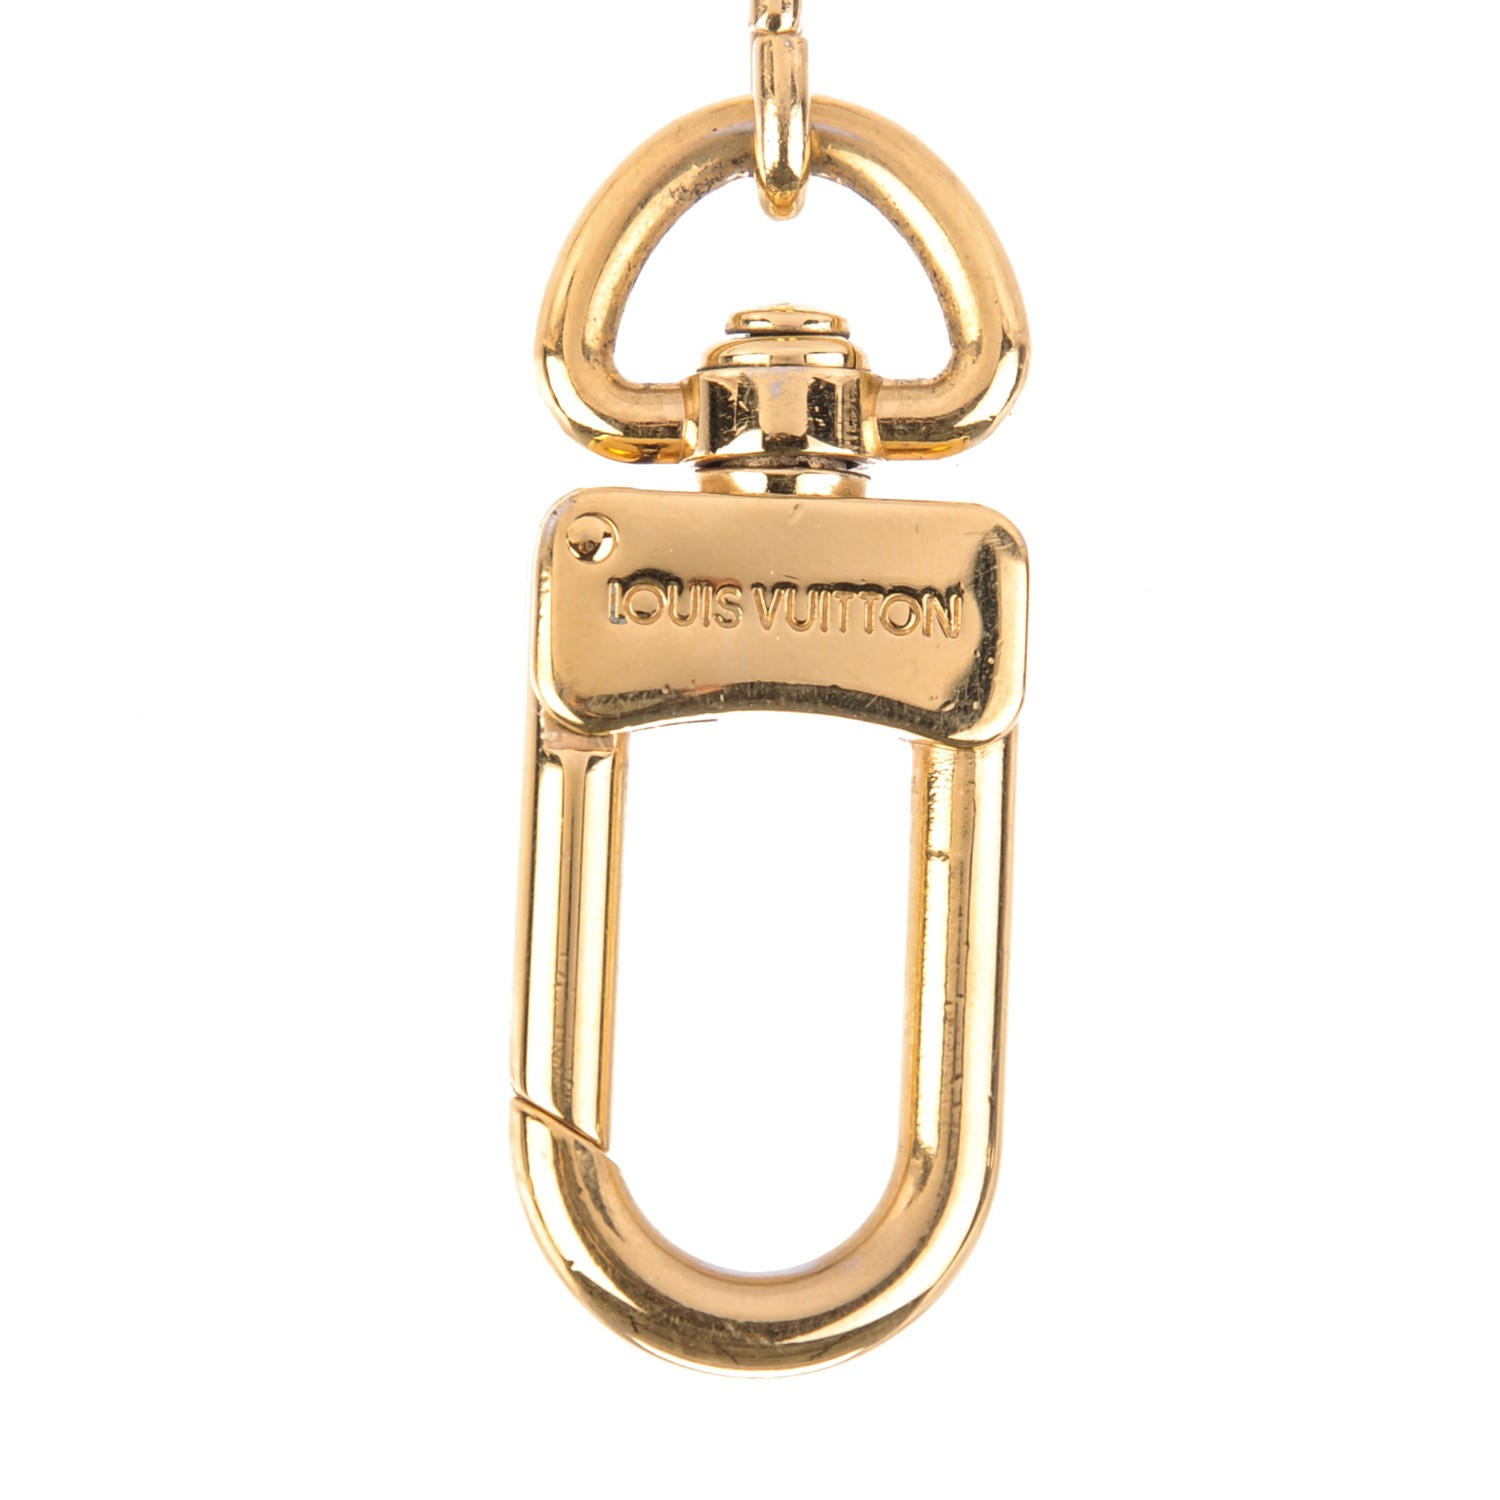 LOUIS VUITTON Pochette Extender Key Ring Gold 729614